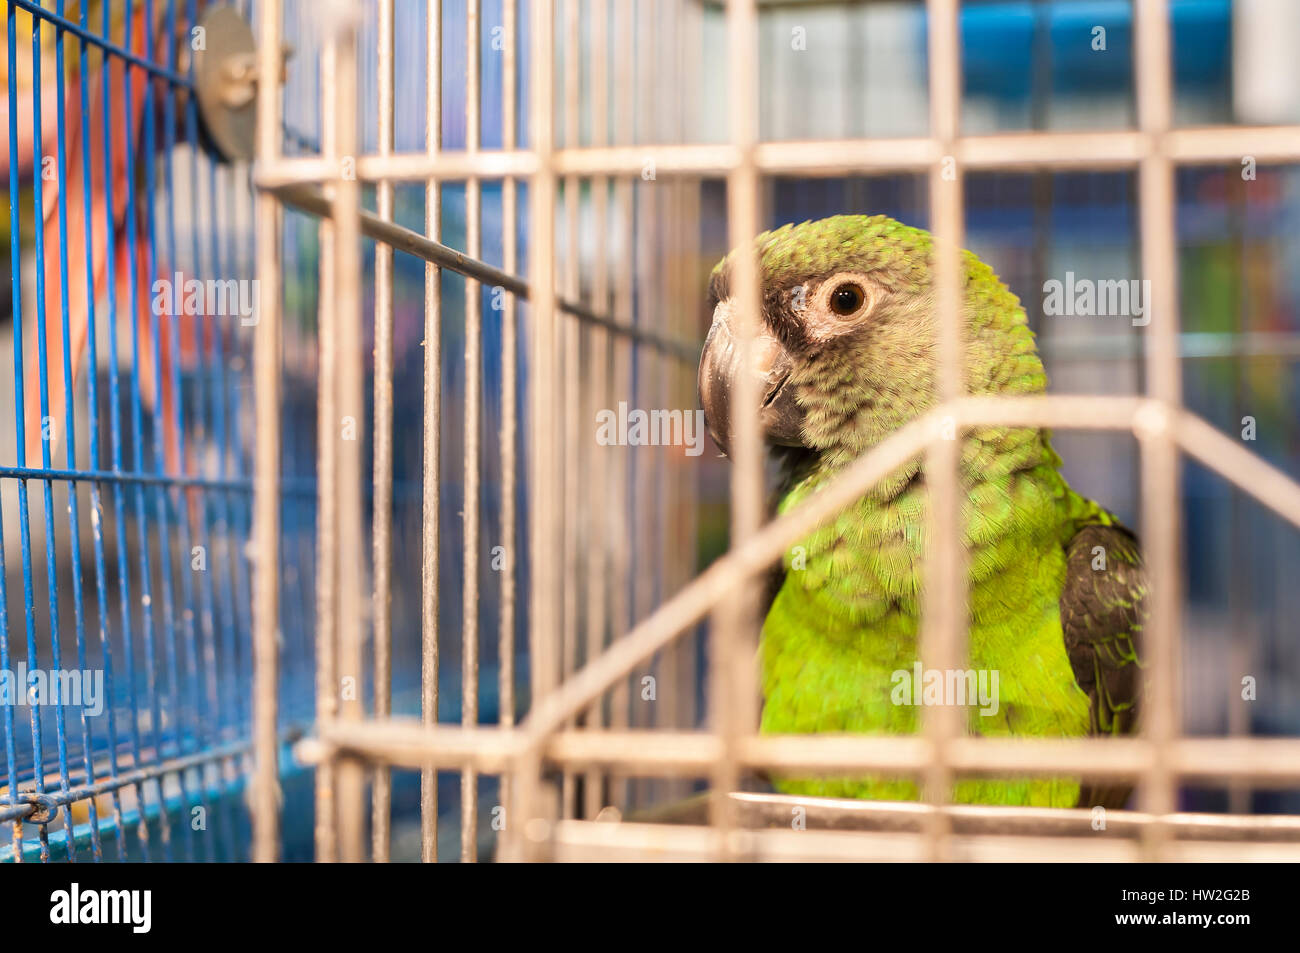 Green parrot in a cage at Yuen Po Bird Market, Mong Kok, Hong Kong Stock Photo